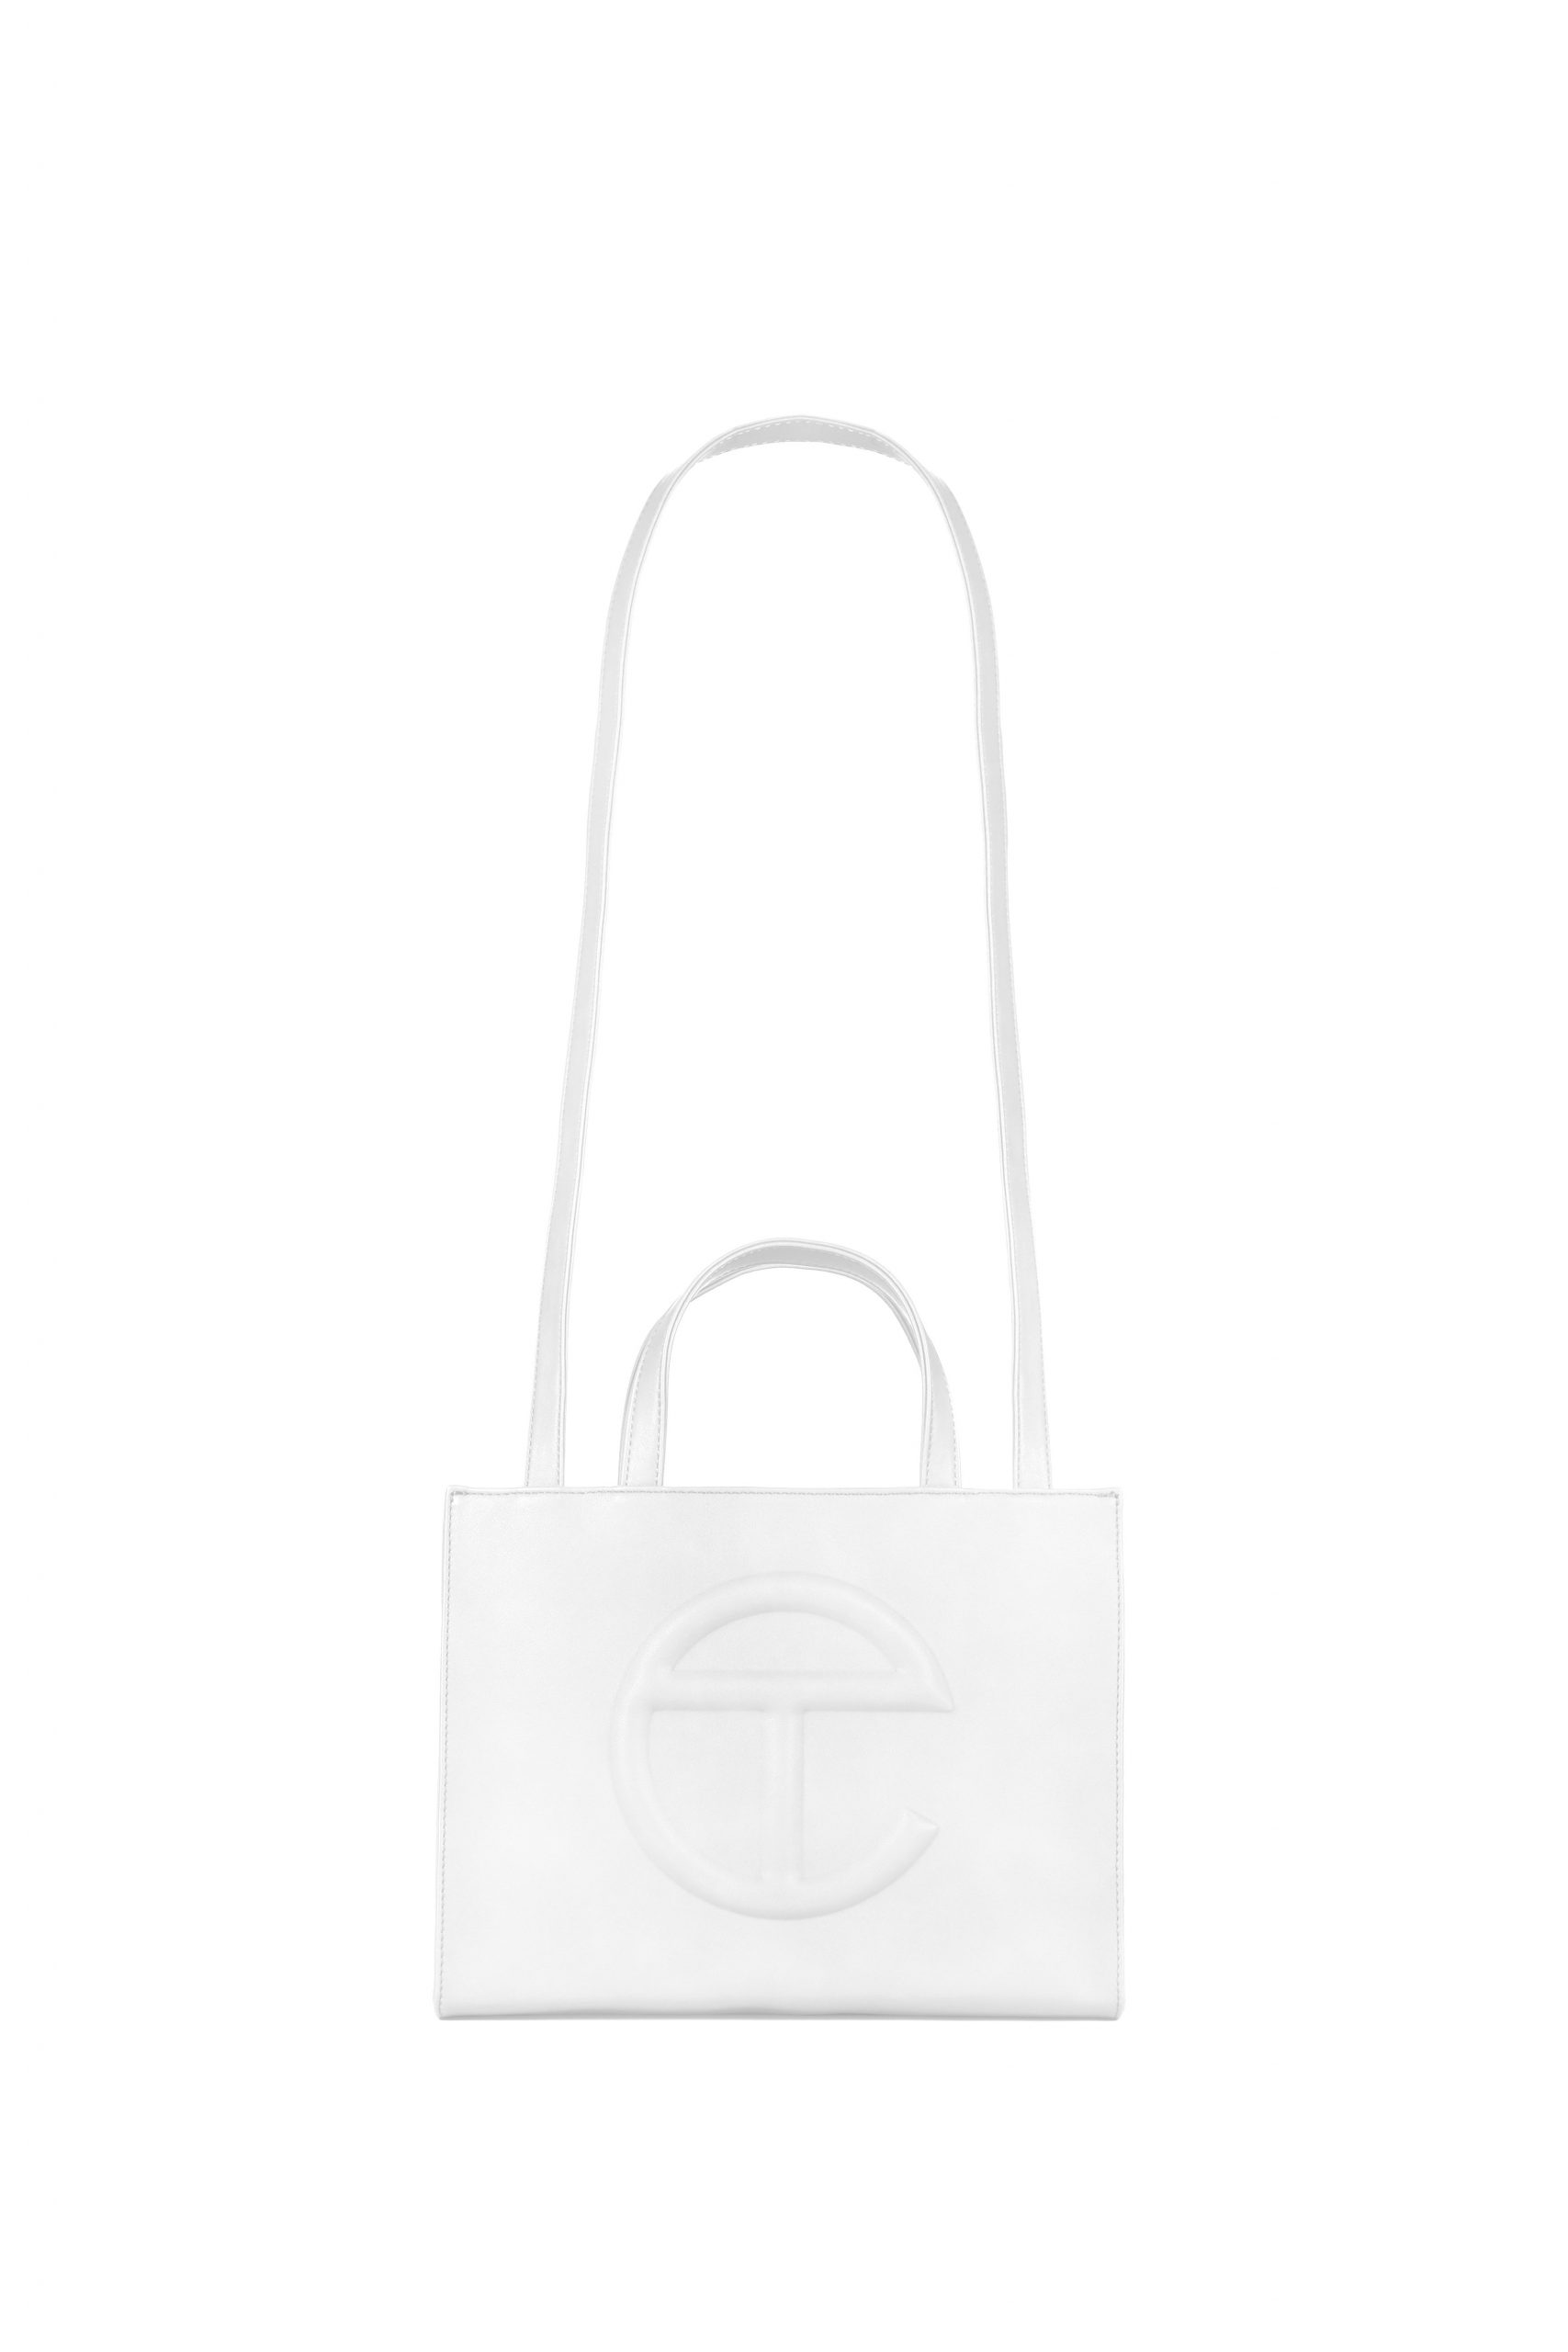 Medium White Shopping Bag